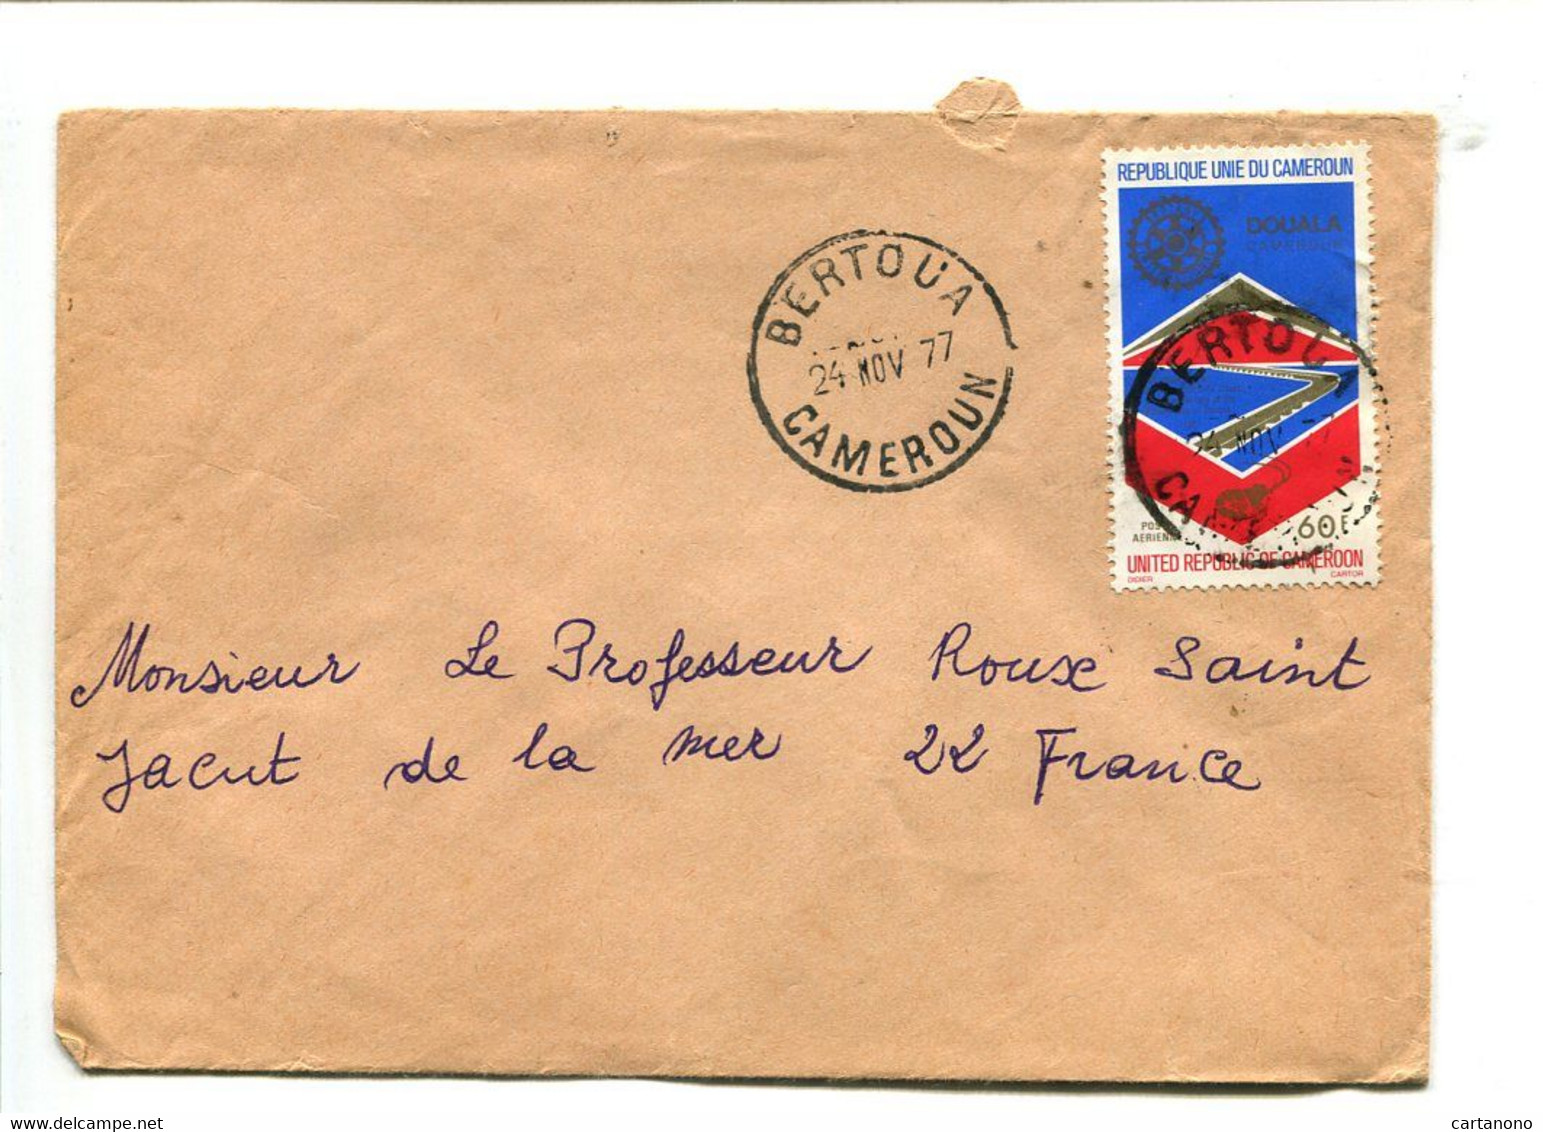 CAMEROUN Bertoua 1977 - Affranchissement Seul Sur Lettre - Rotary International - Rotary Club